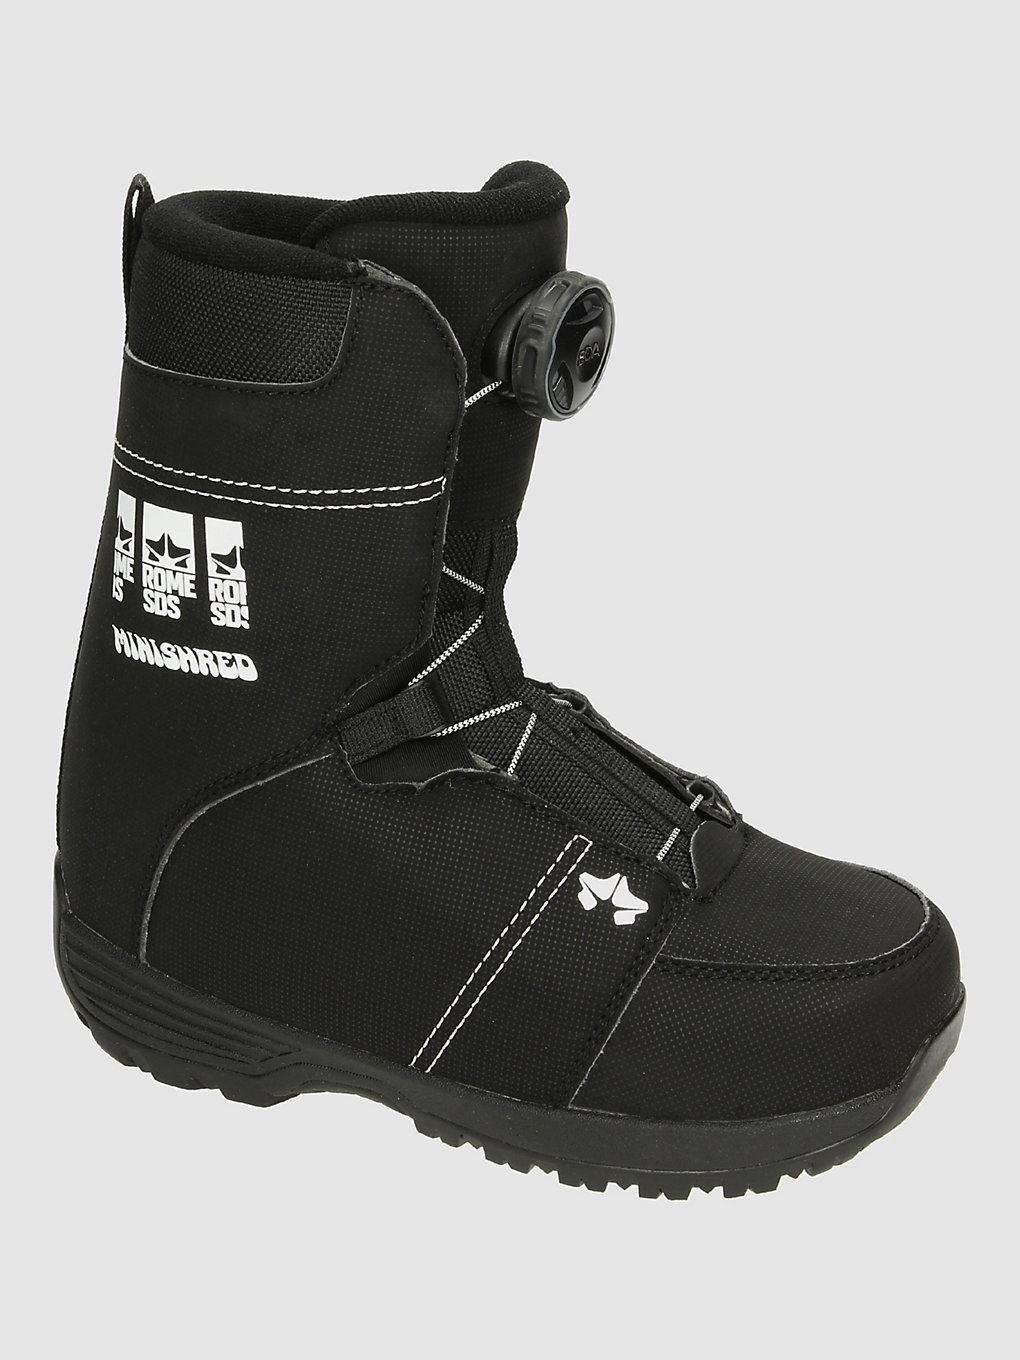 Rome Minishred 2023 Snowboard-Boots black kaufen